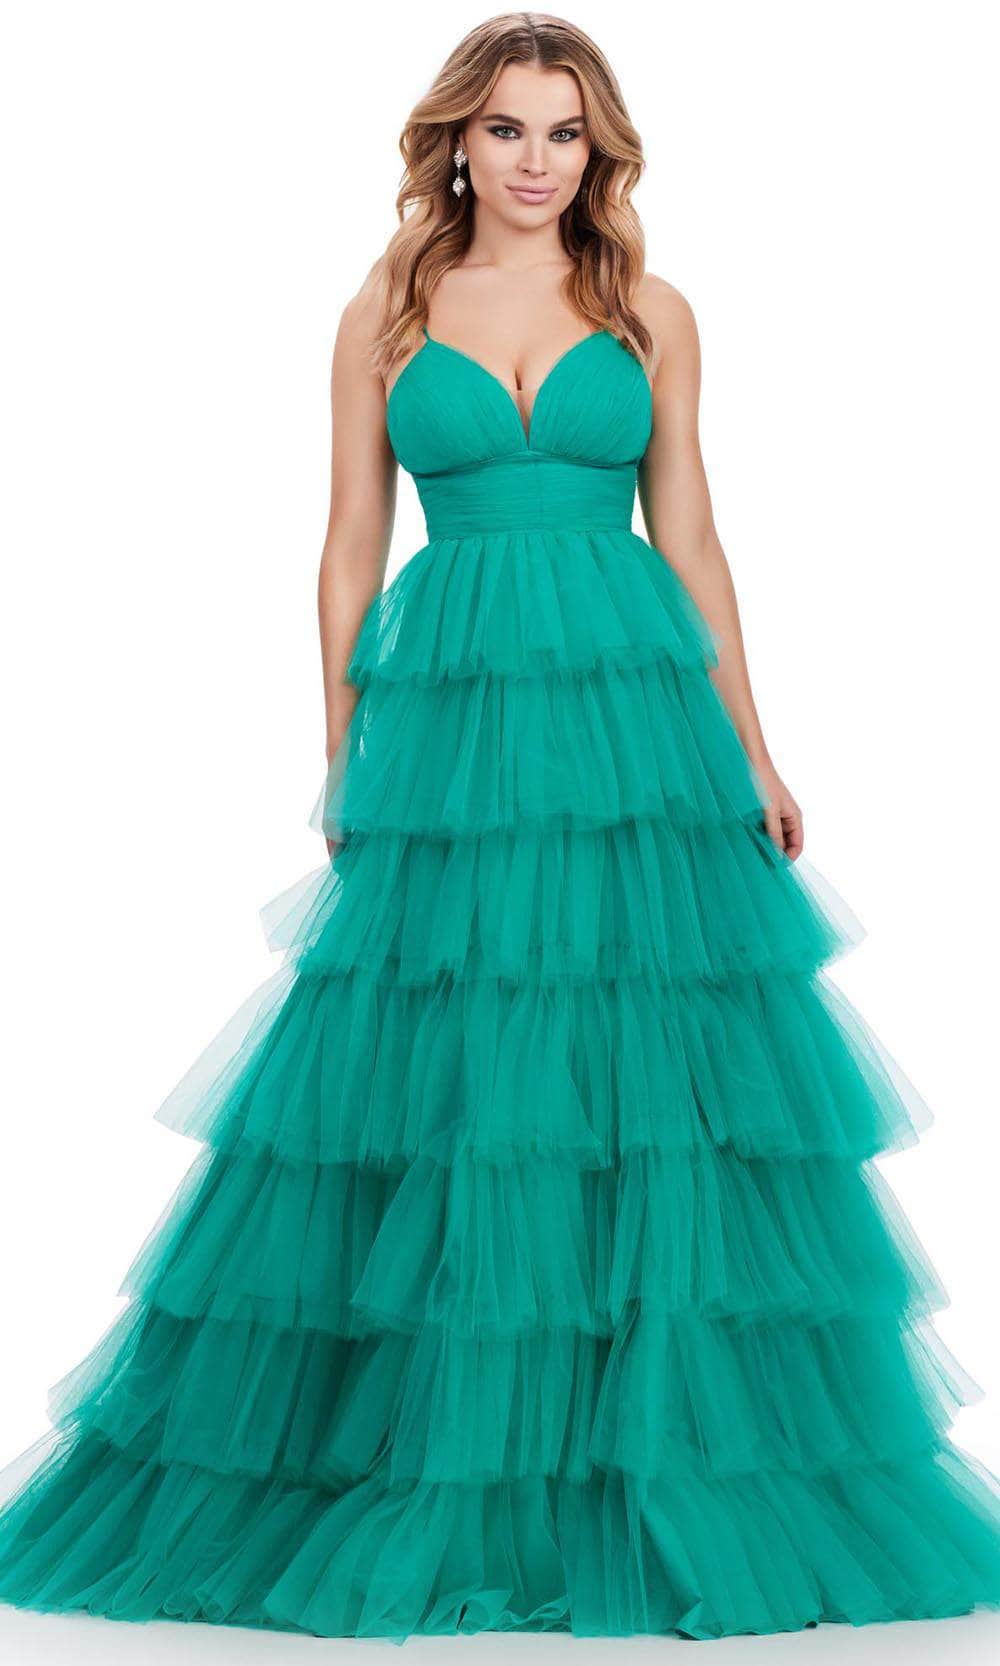 Ashley Lauren 11622 - Tiered A-Line Prom Dress 00 /  Jade